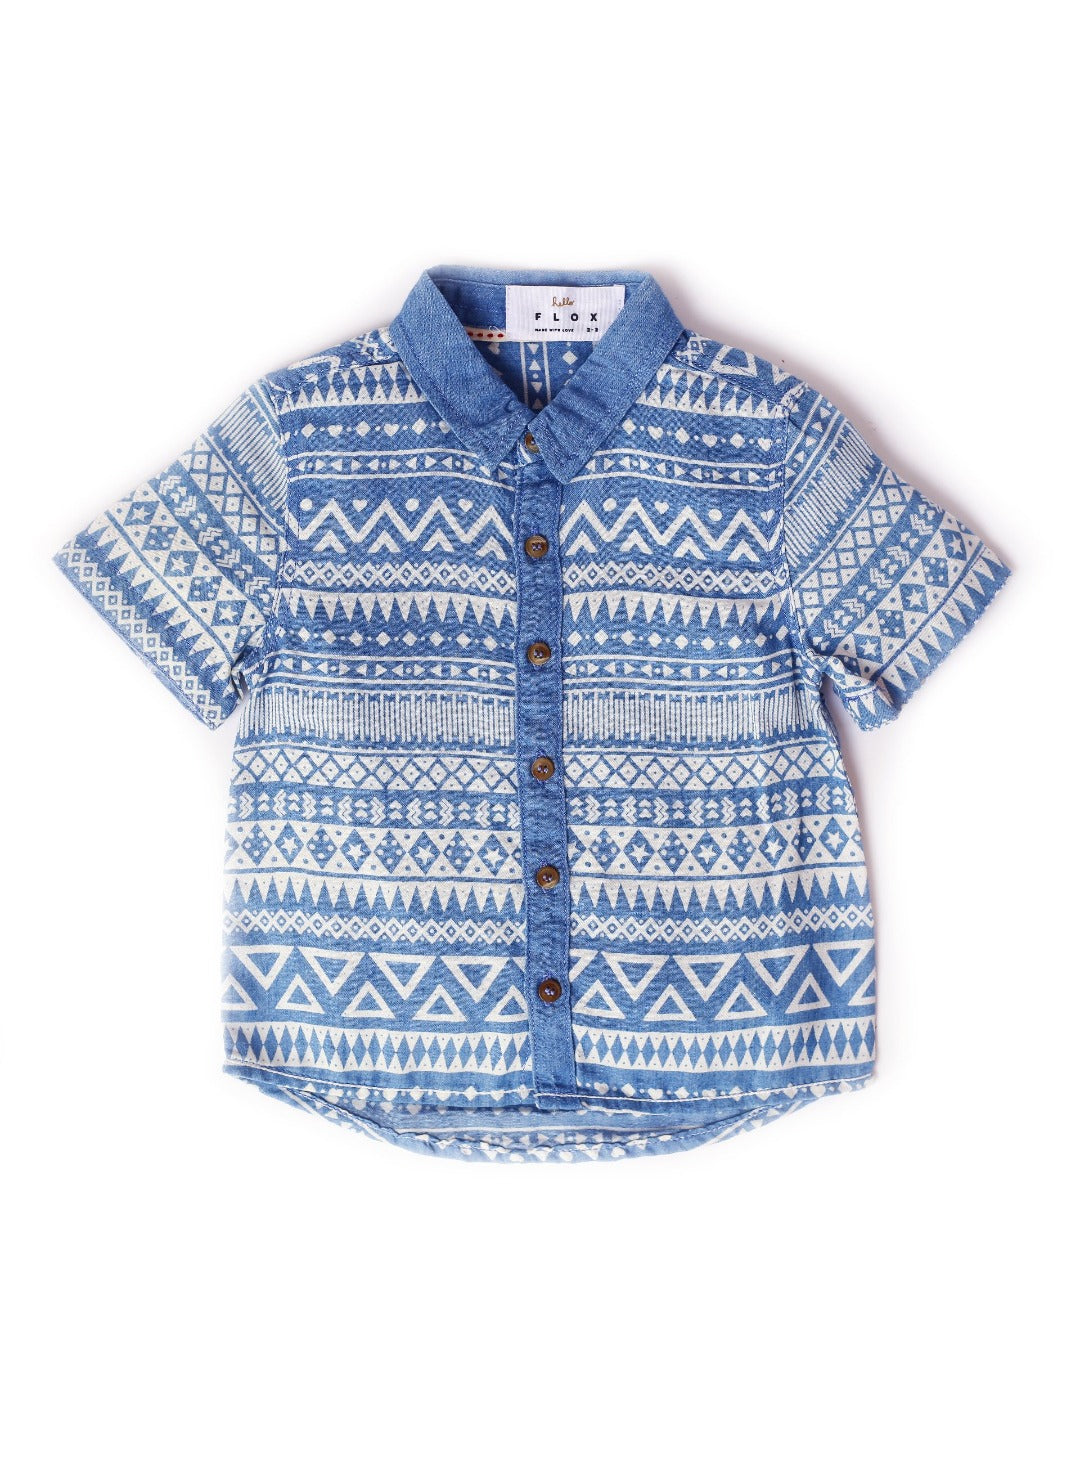 tribal pattern blue denim shirt